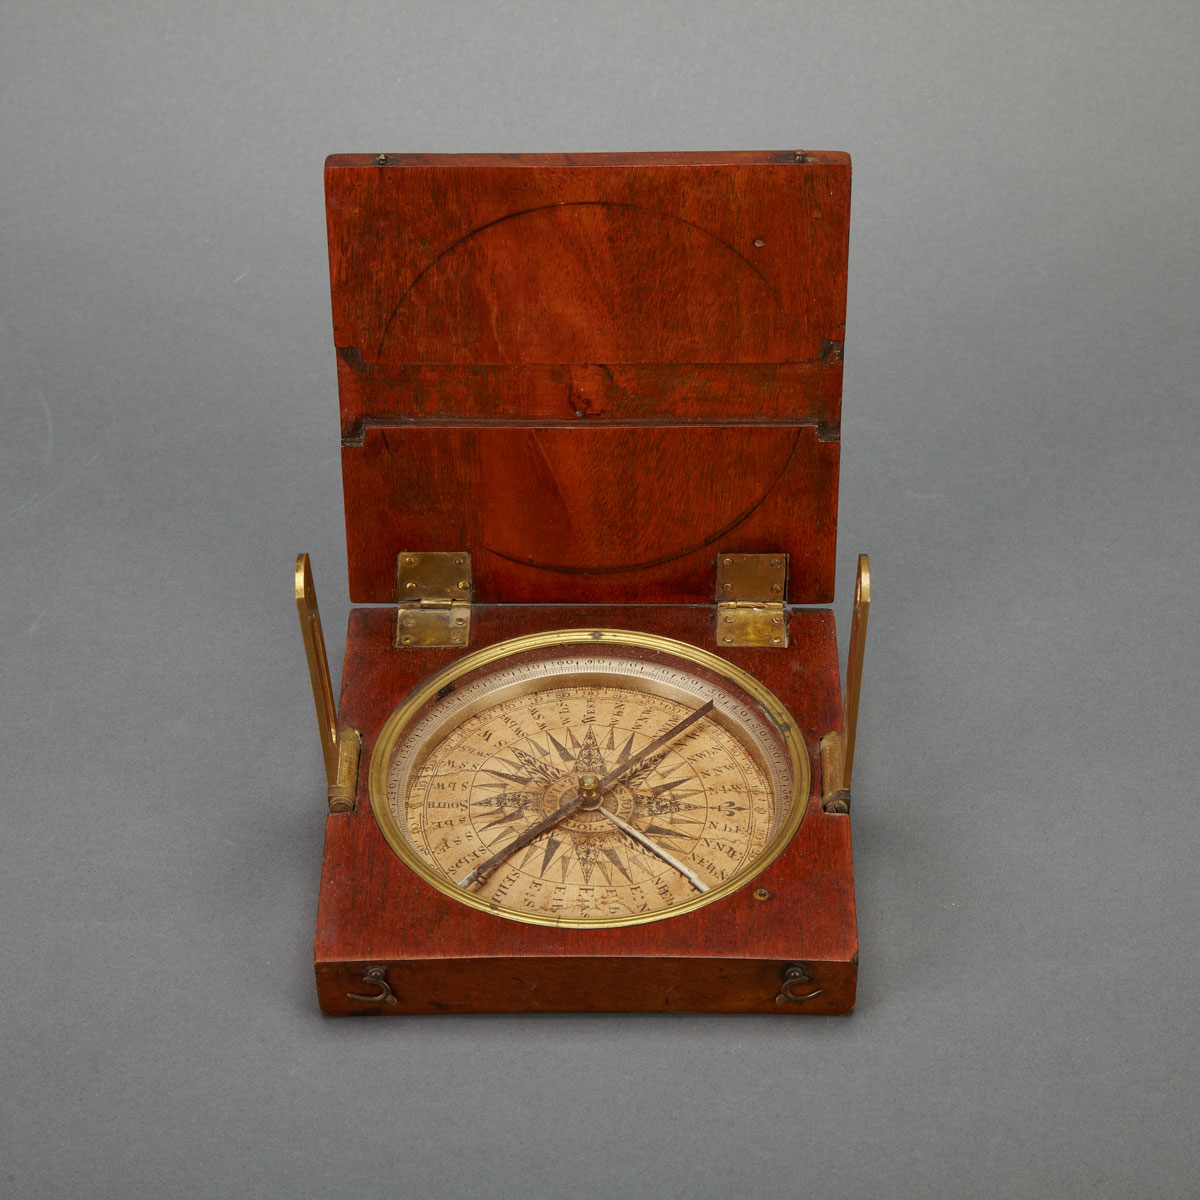 English Walnut Cased Alidade Compass 17a26d